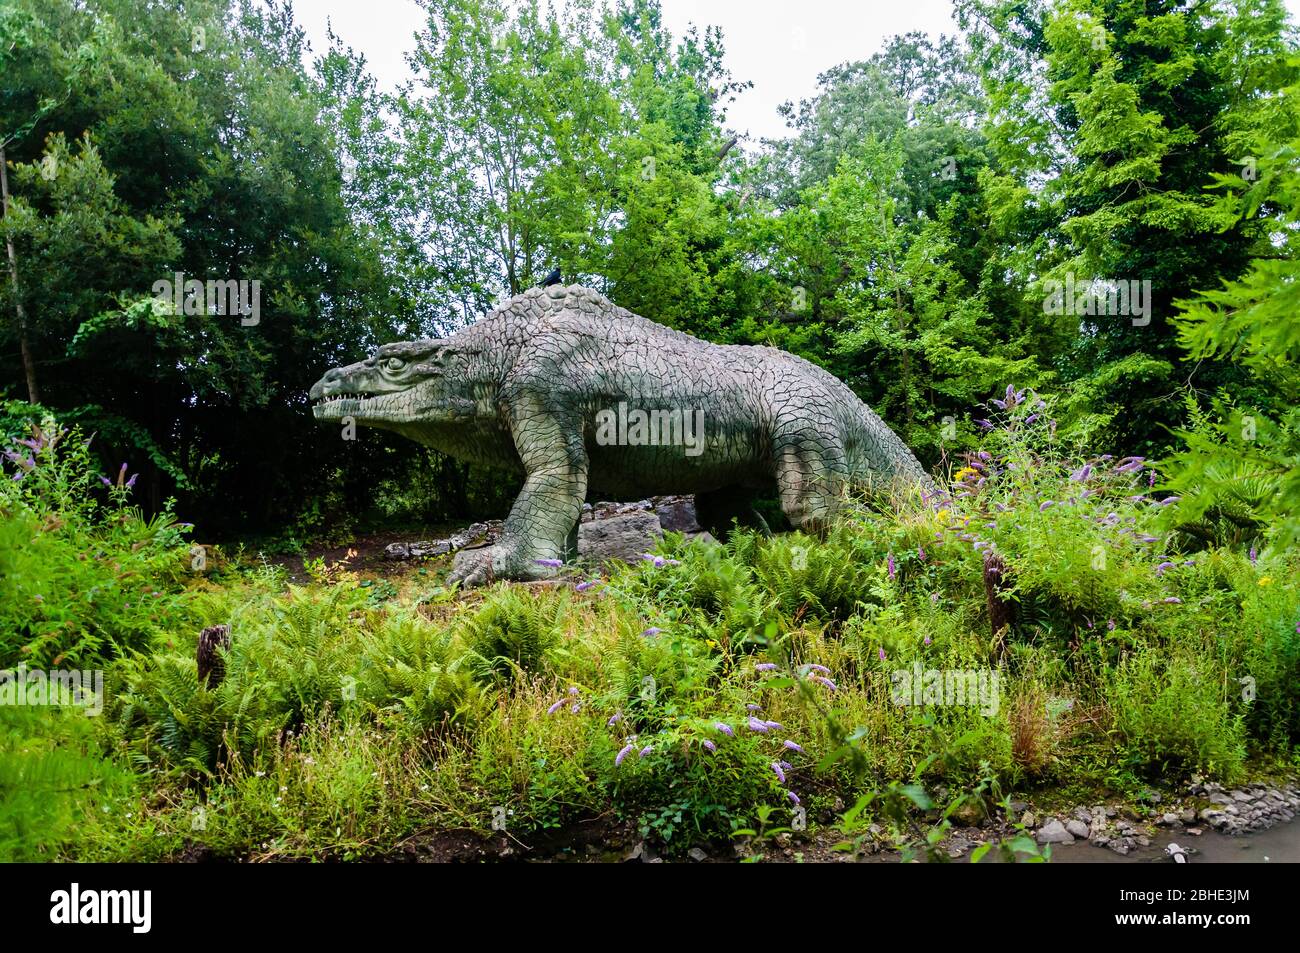 The Megalosaurus ,Dinosaur models in Crystal Palace Park, London, UK Stock Photo